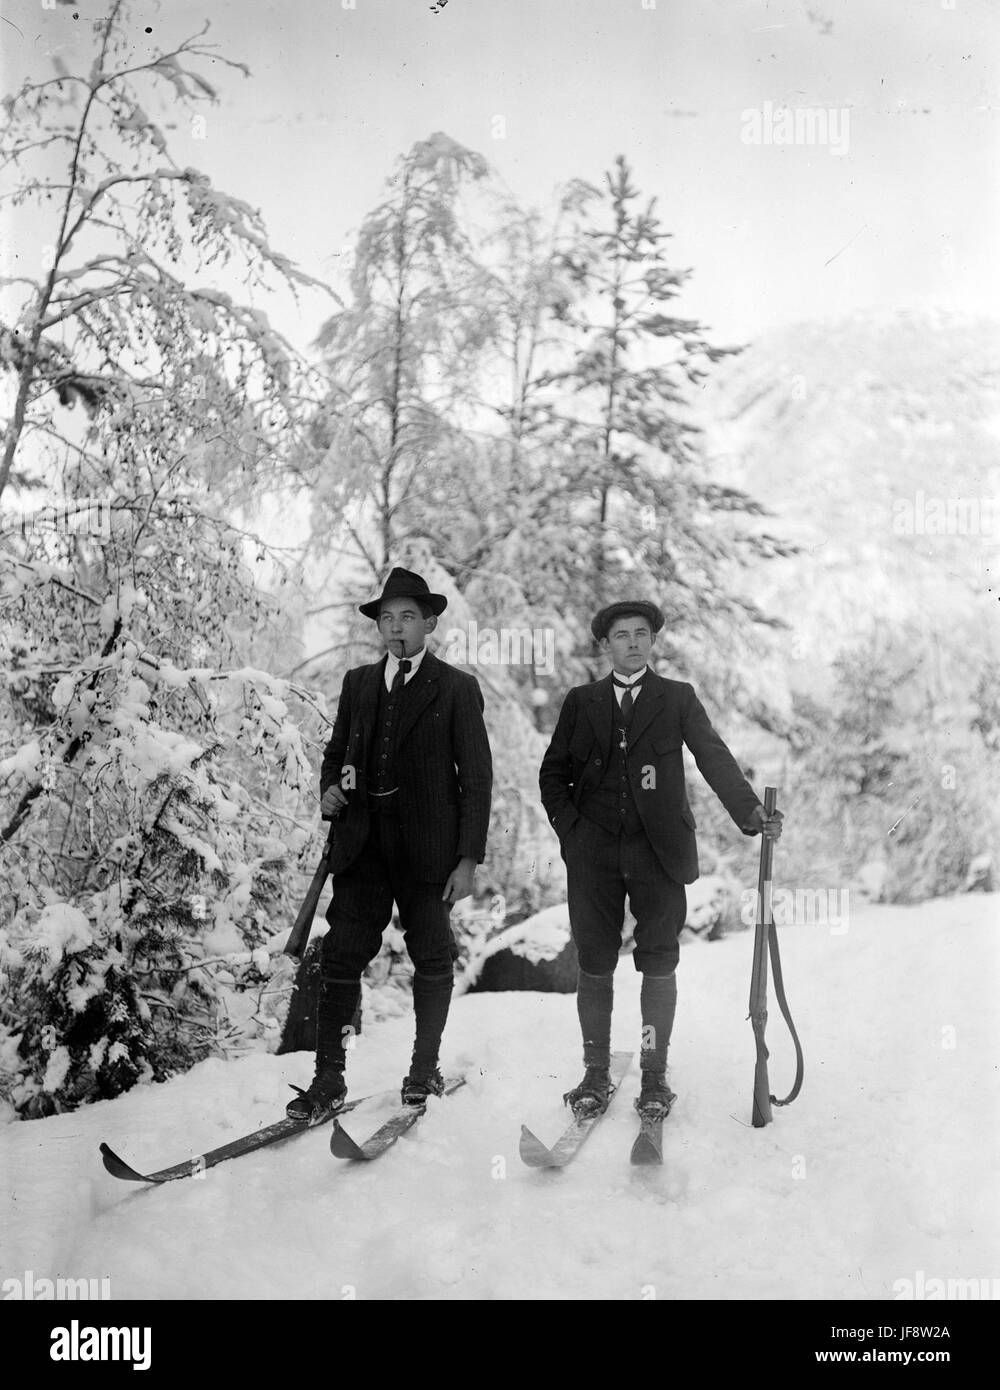 Ragnvald Halbrend and Hermann Grimeland skiing, ca 1915-1922 32755261933 o Stock Photo